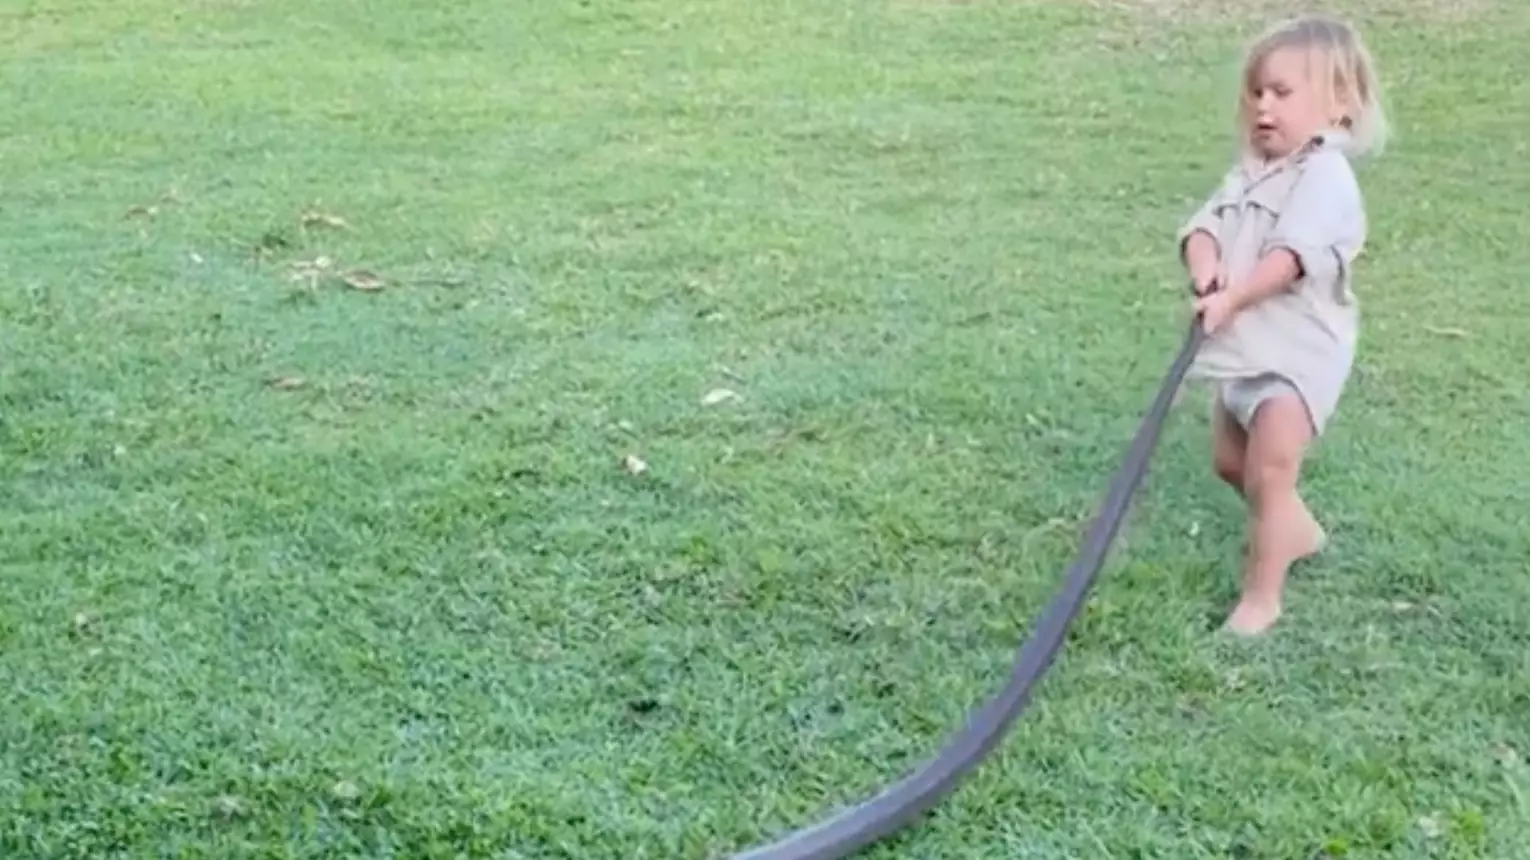 Aussie Croc Hunter Matt Wright Teaches Toddler Son How To Handle Snakes